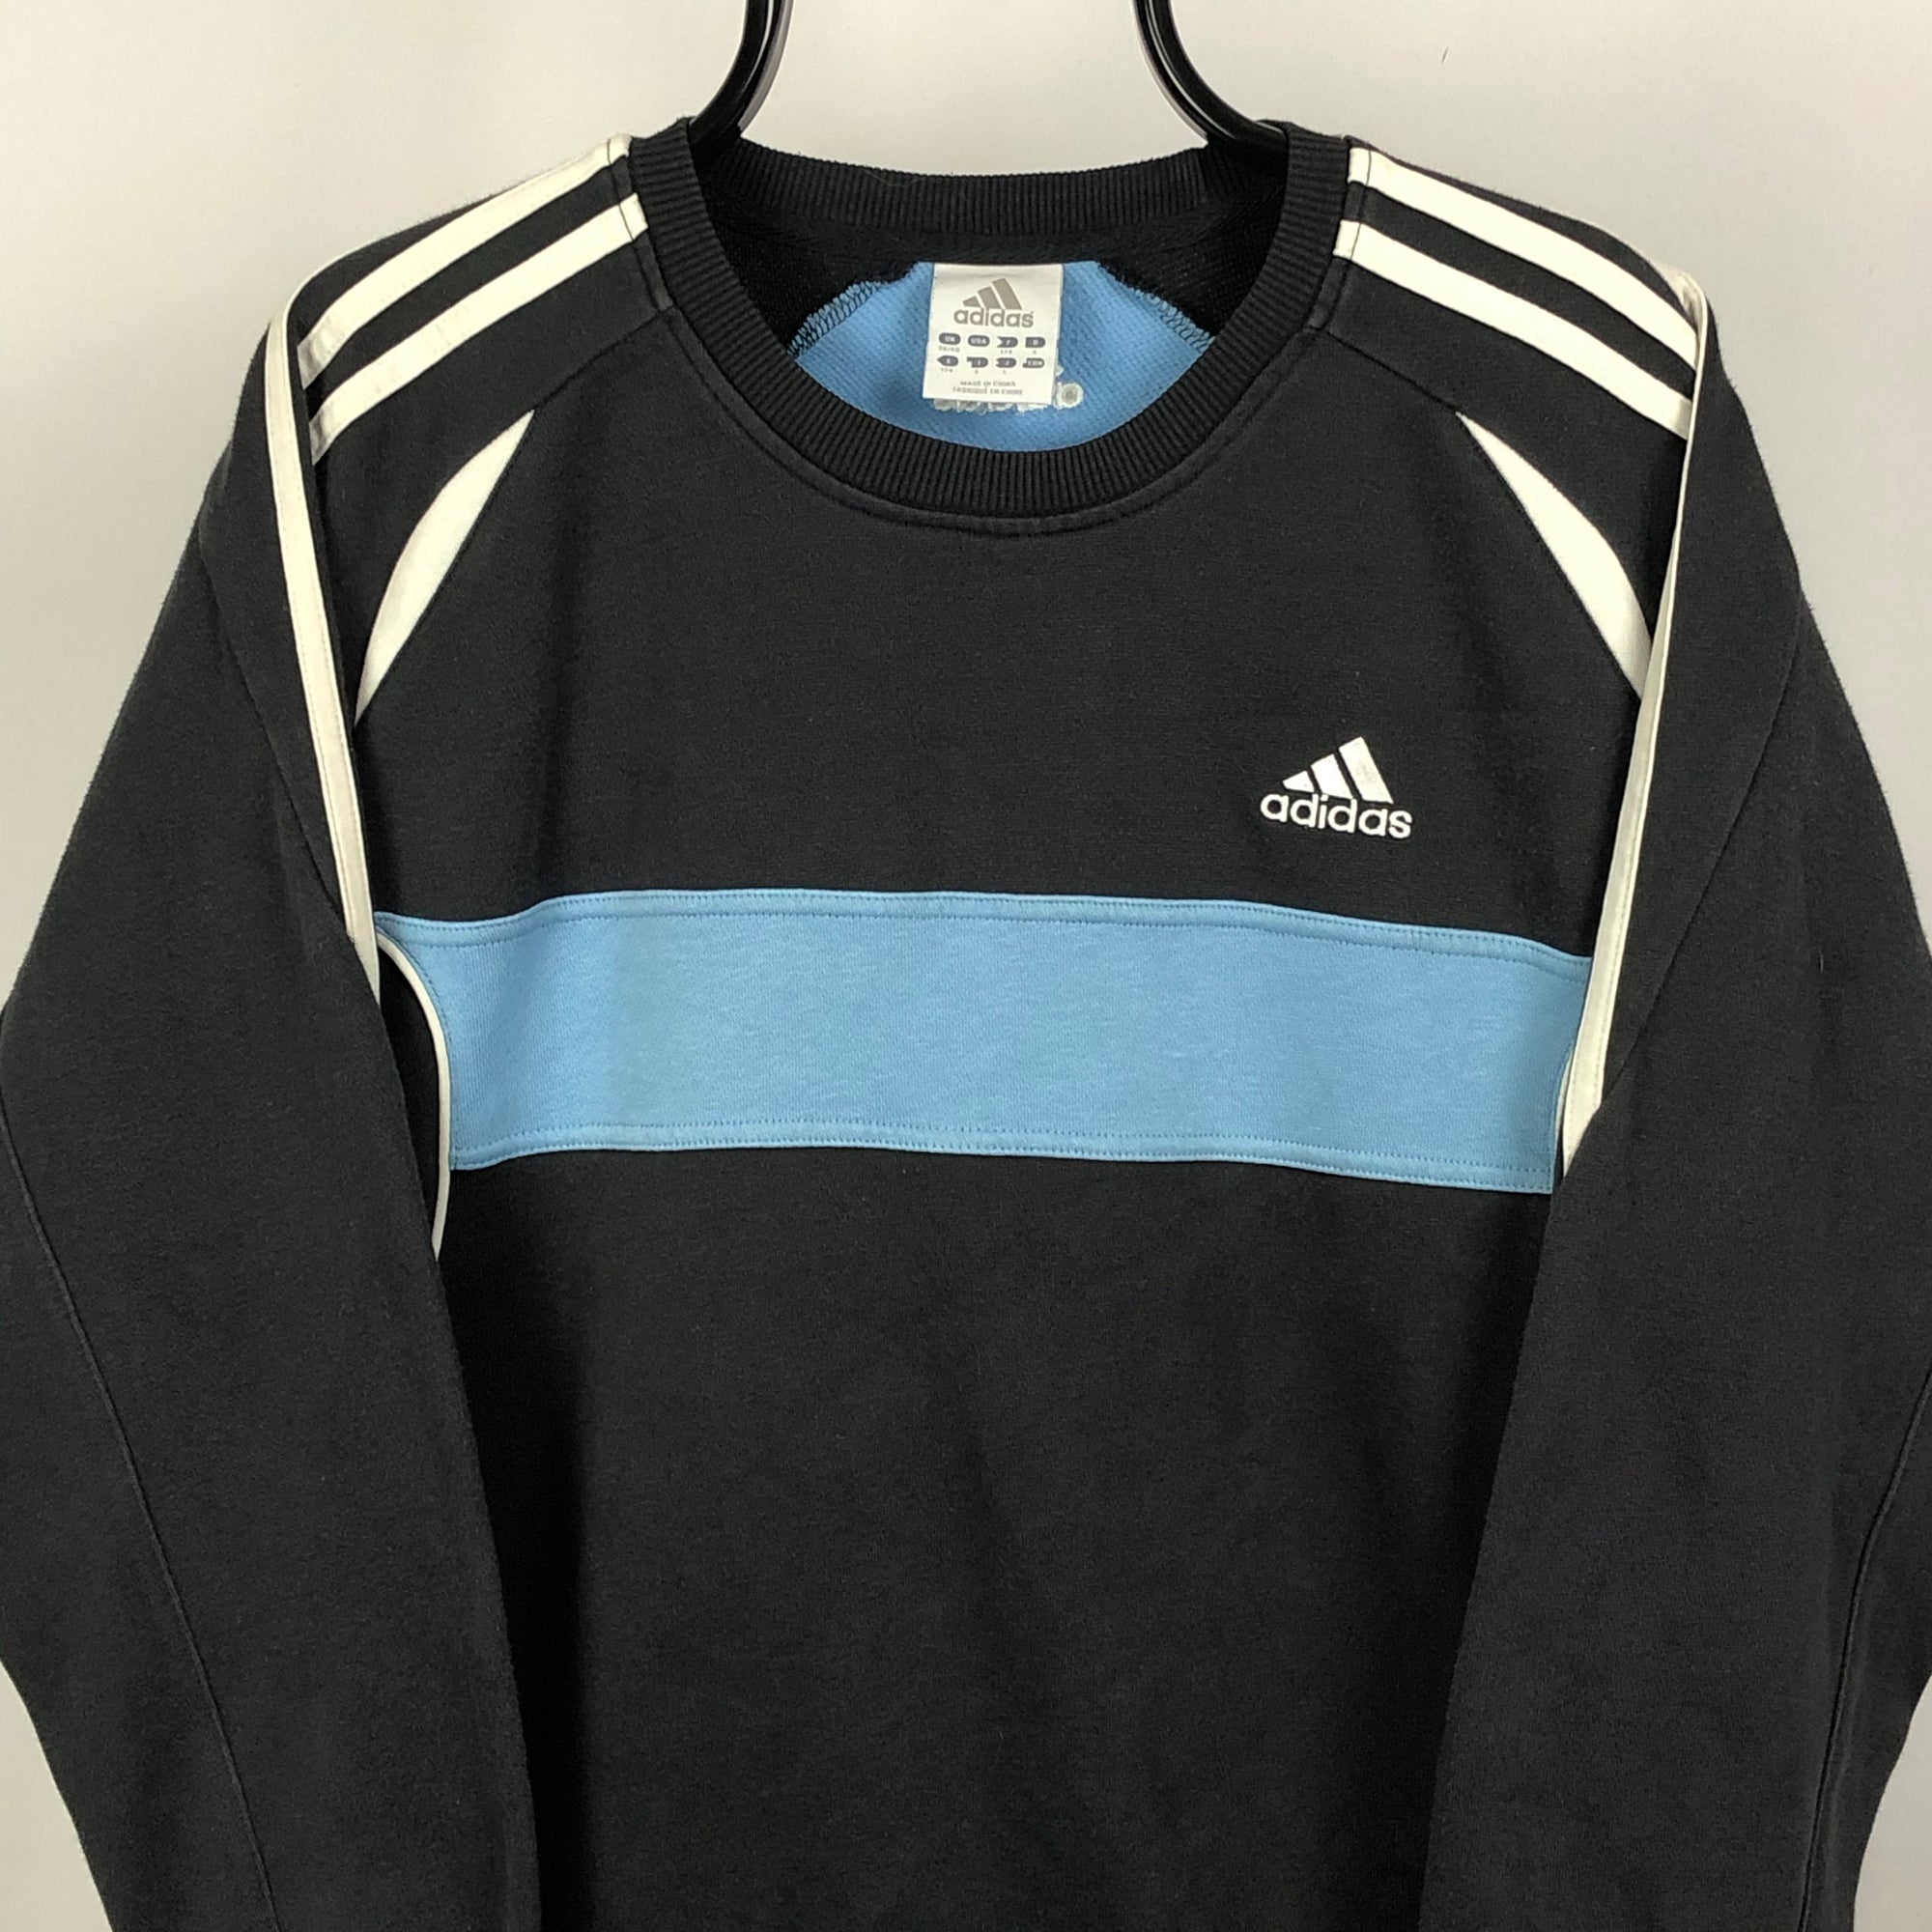 Vintage Adidas Sweatshirt in Baby Blue & Black - Men’s Medium/Women’s Large